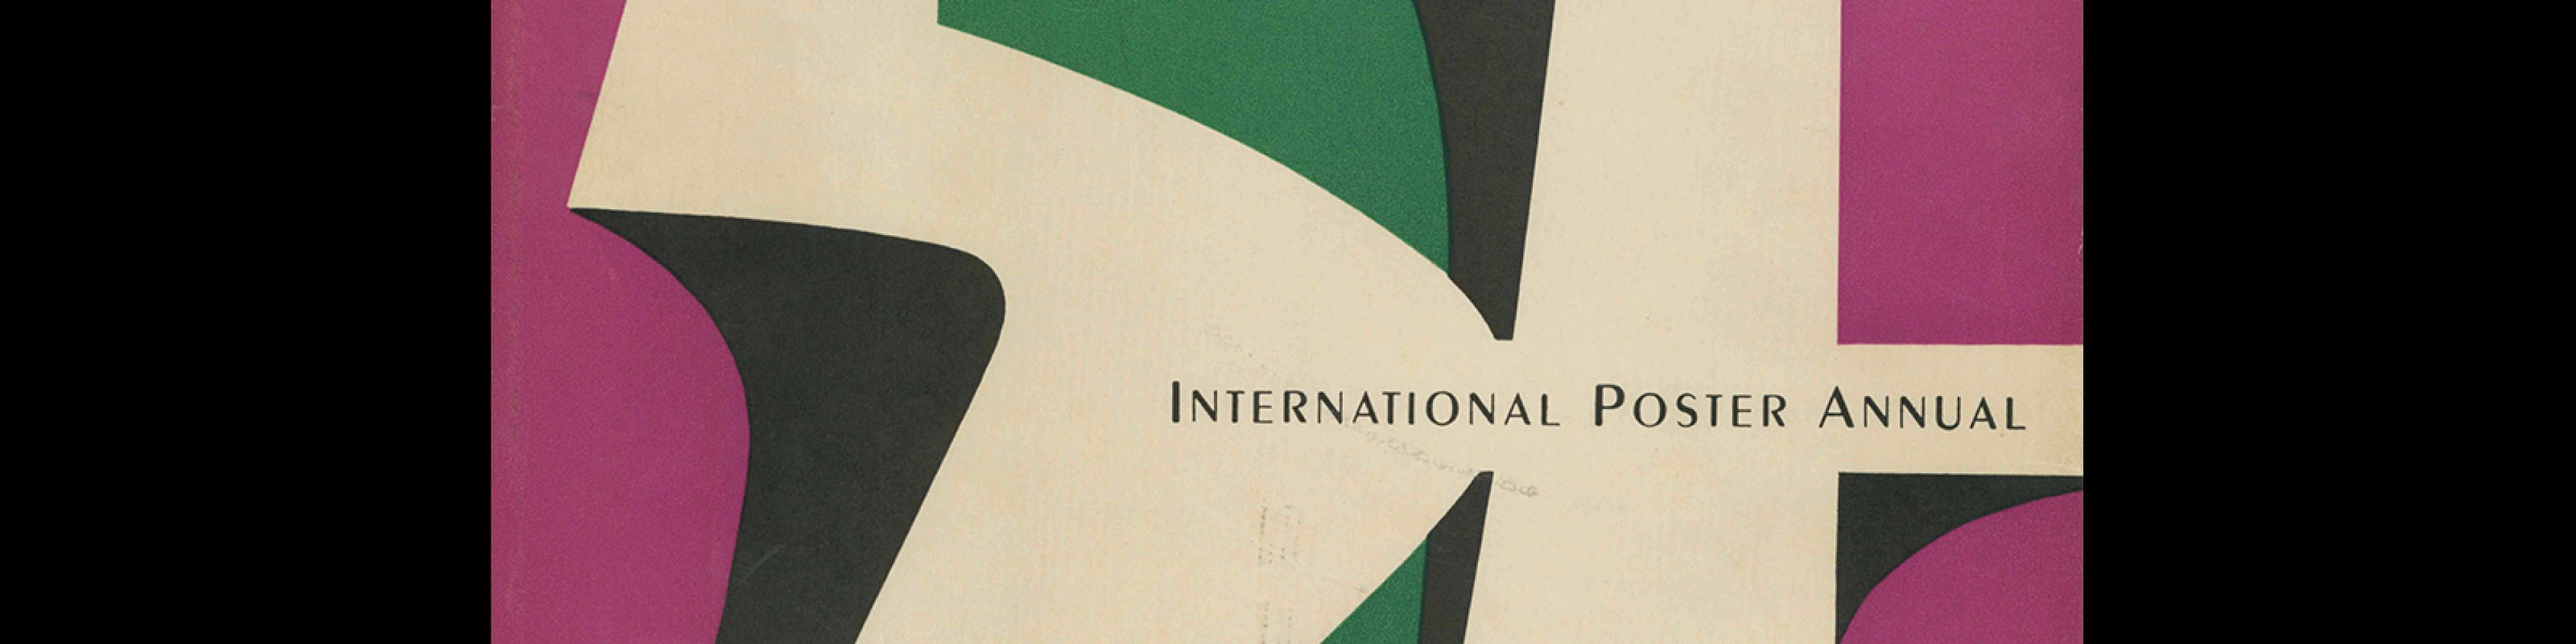 International Poster Annual - 1951. Designed by Walter Allner